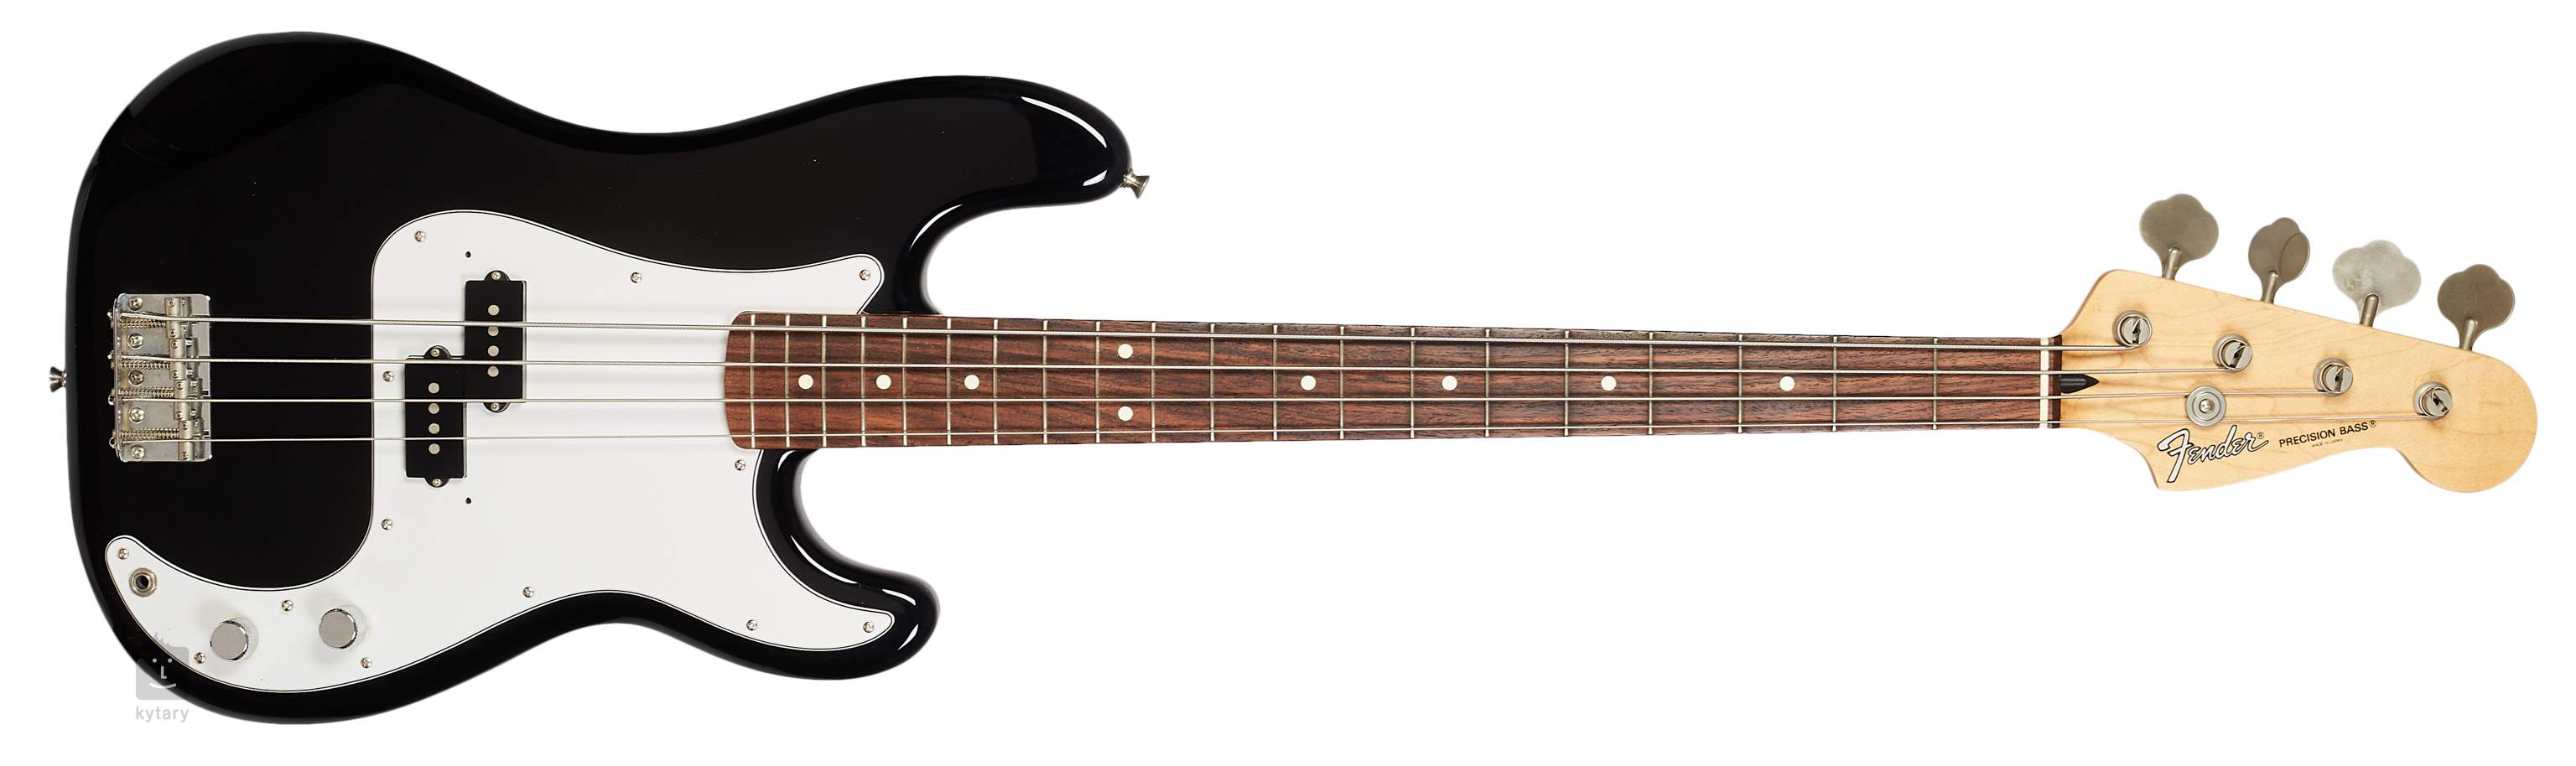 Fender mexico STANDARD Precision bass - ベース